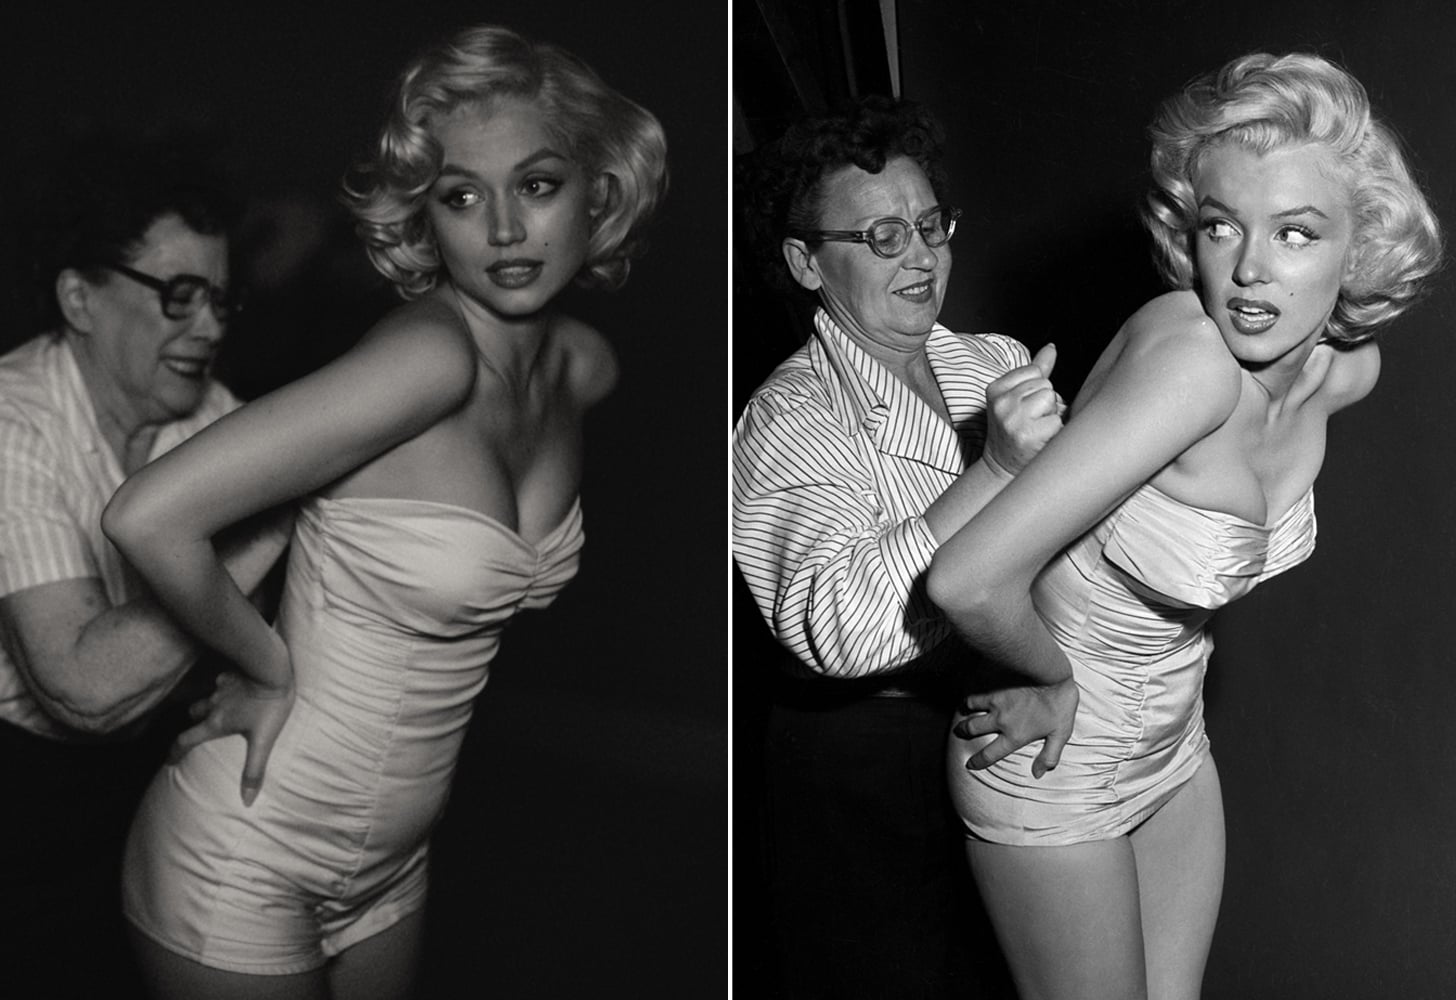 How Ana de Armas Transformed into Marilyn Monroe for 'Blonde